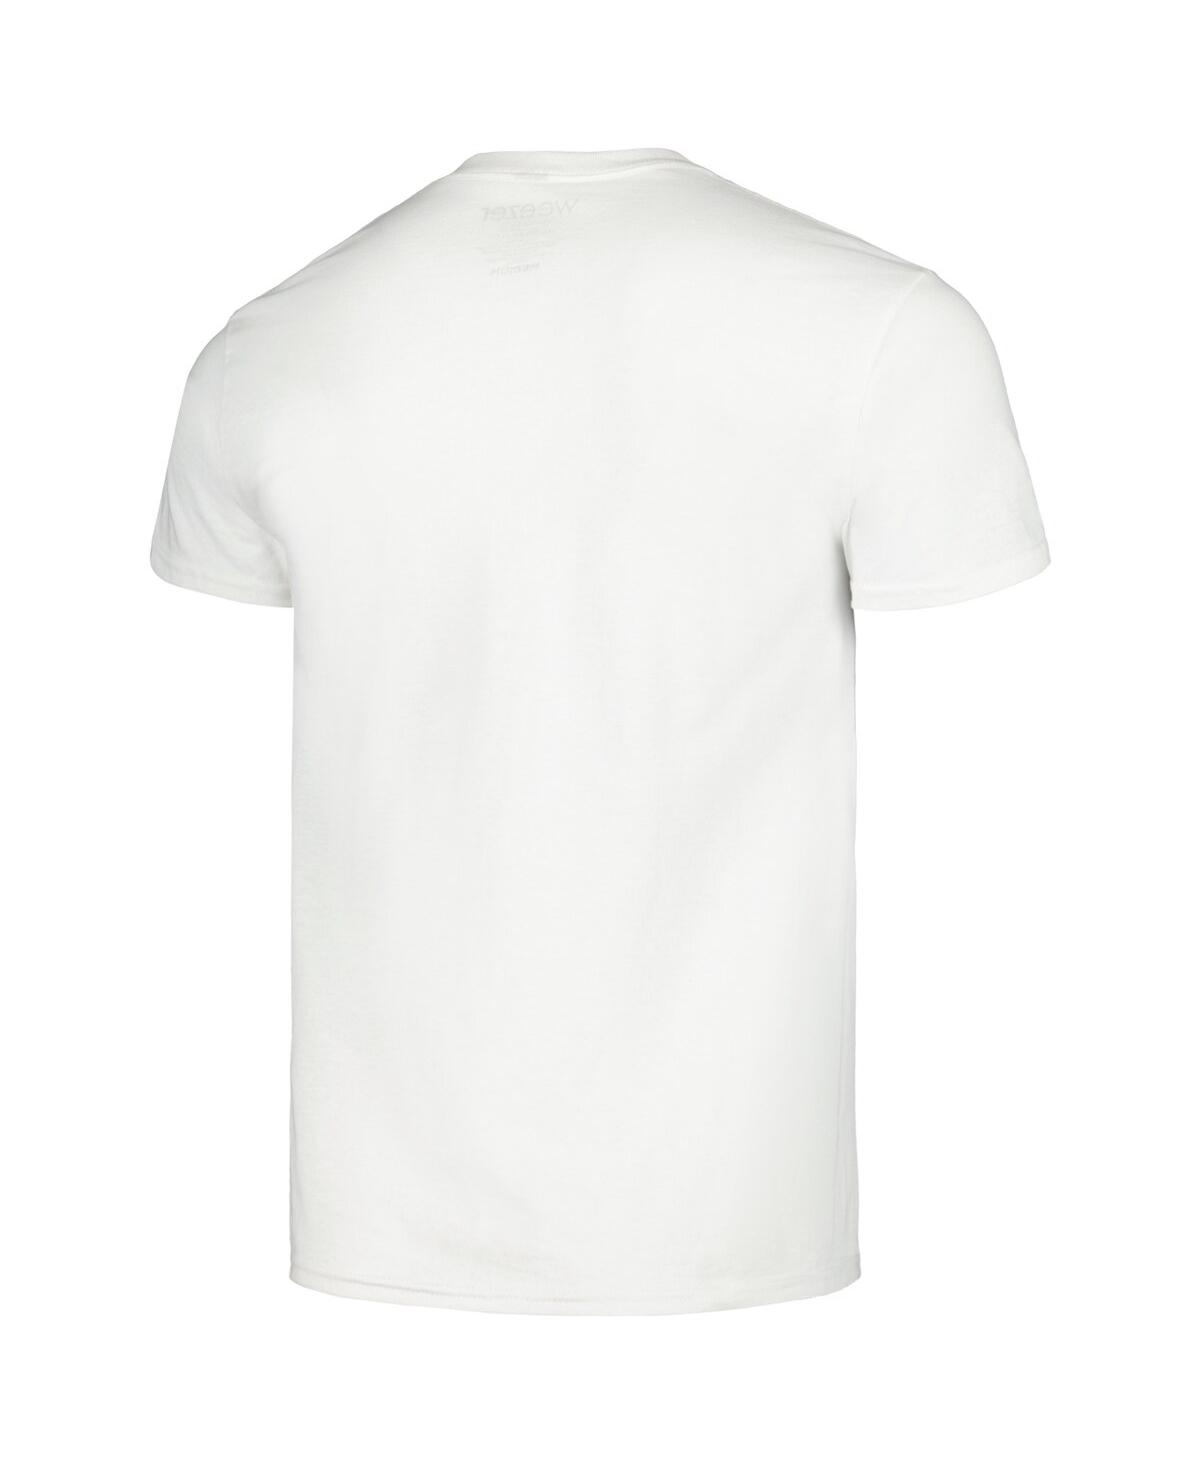 Shop Manhead Merch Men's White Weezer T-shirt